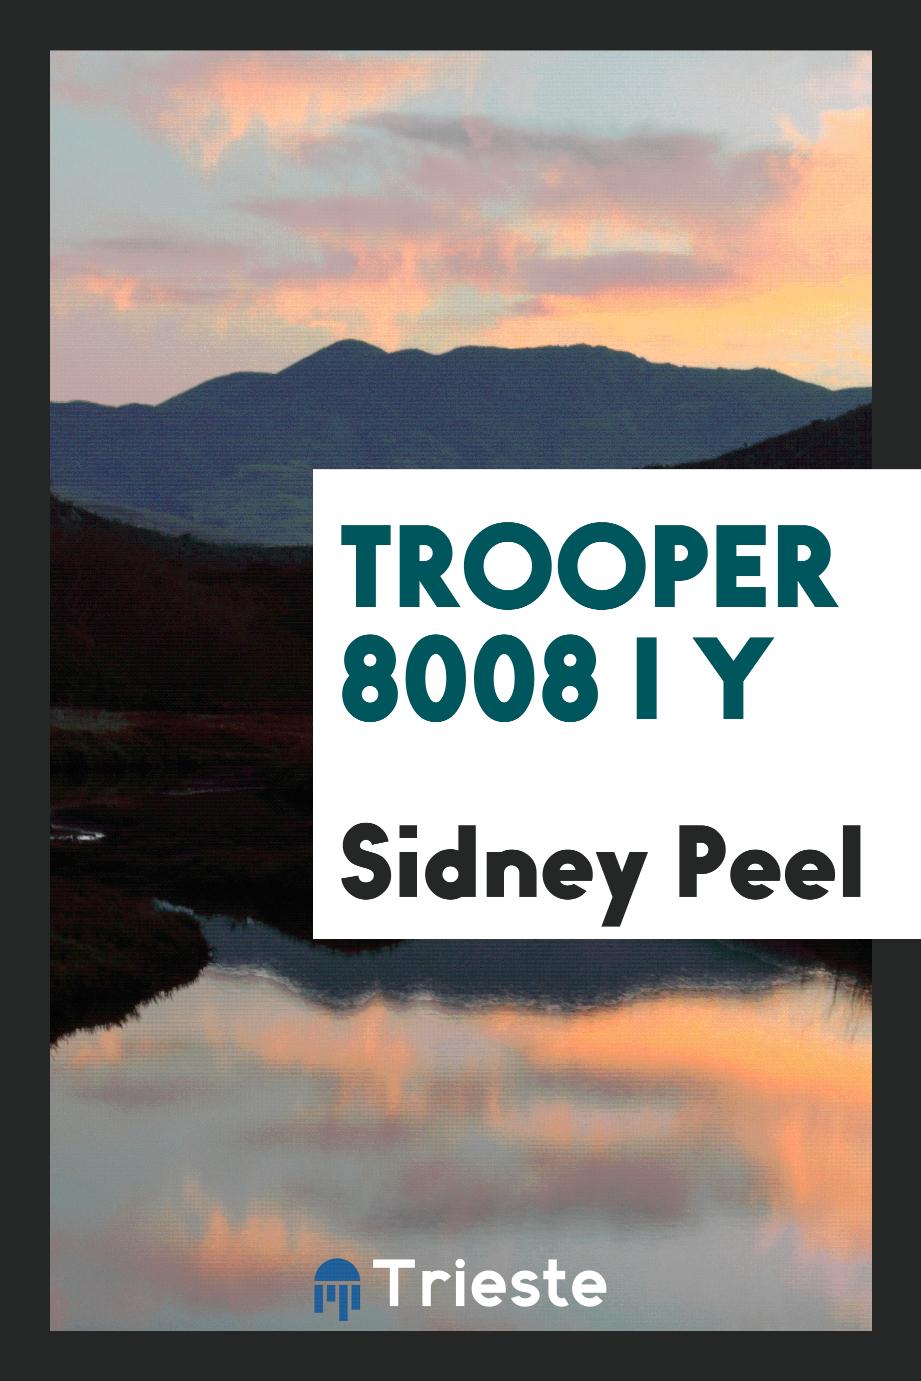 Trooper 8008 I Y